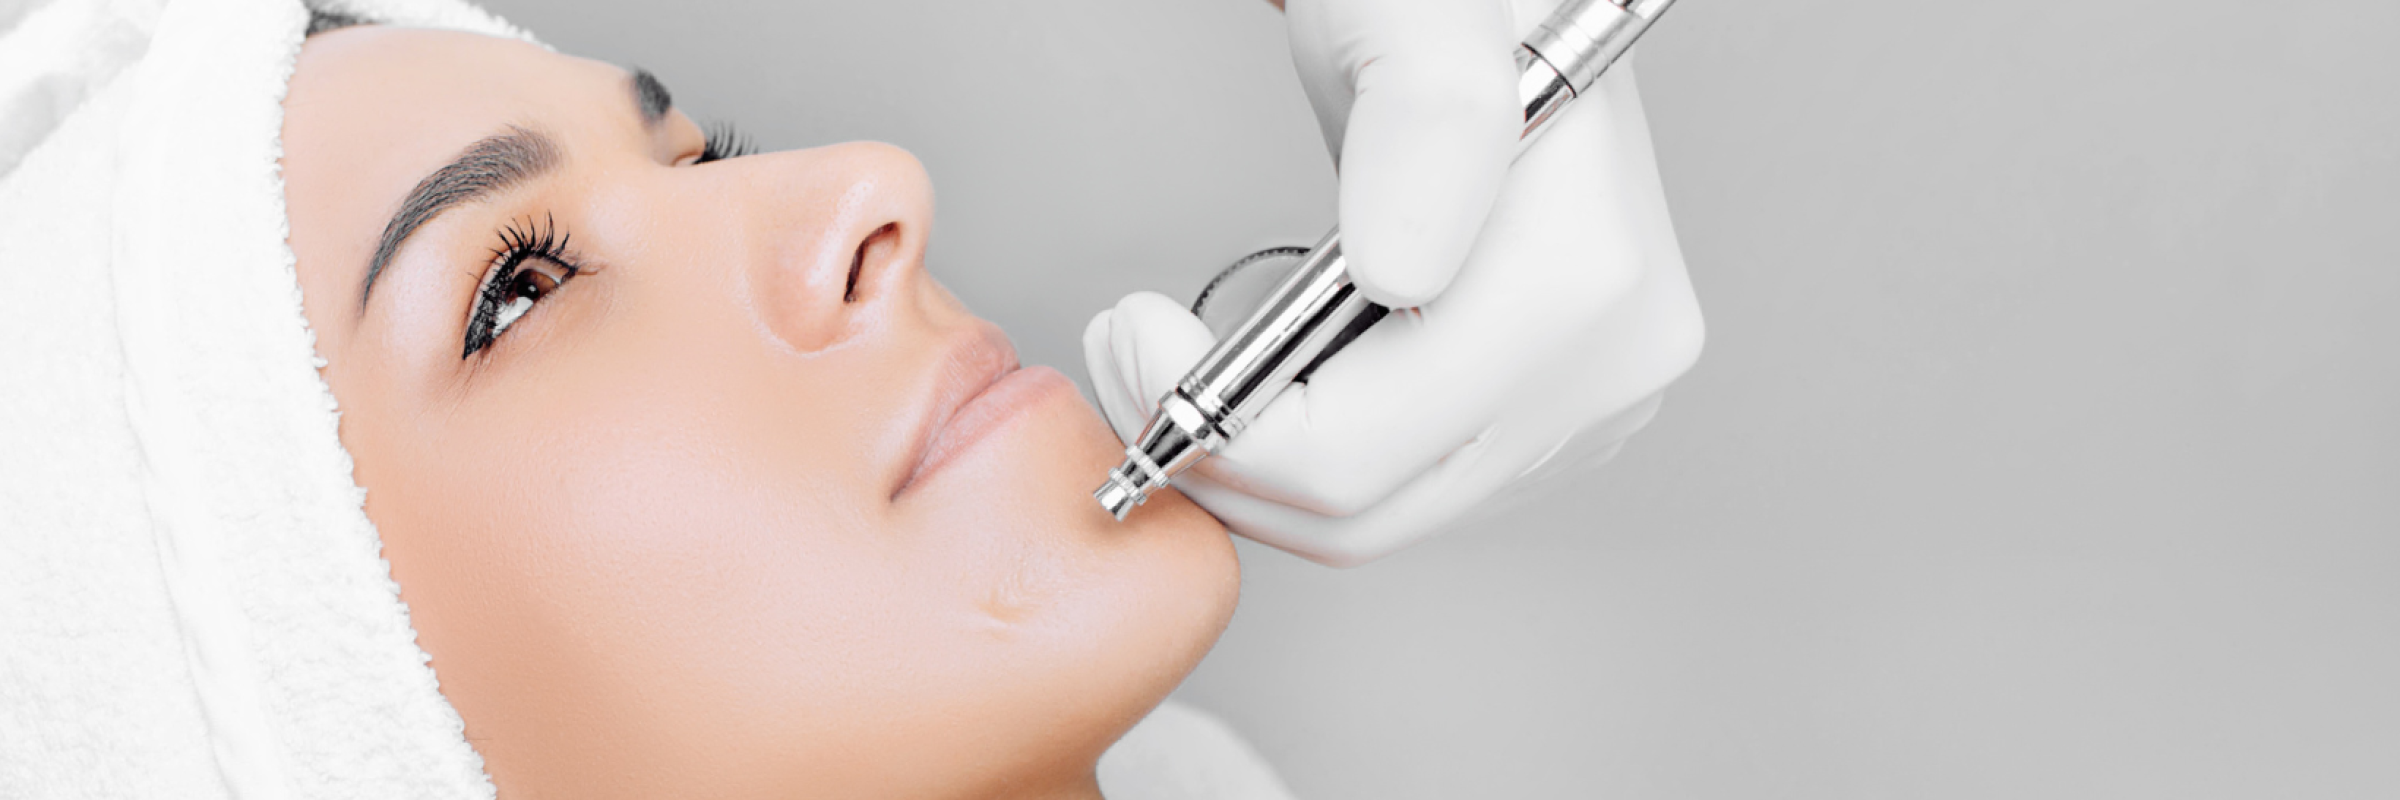 spa treatment dallas facial, sugaring, body contouring, chemical peel